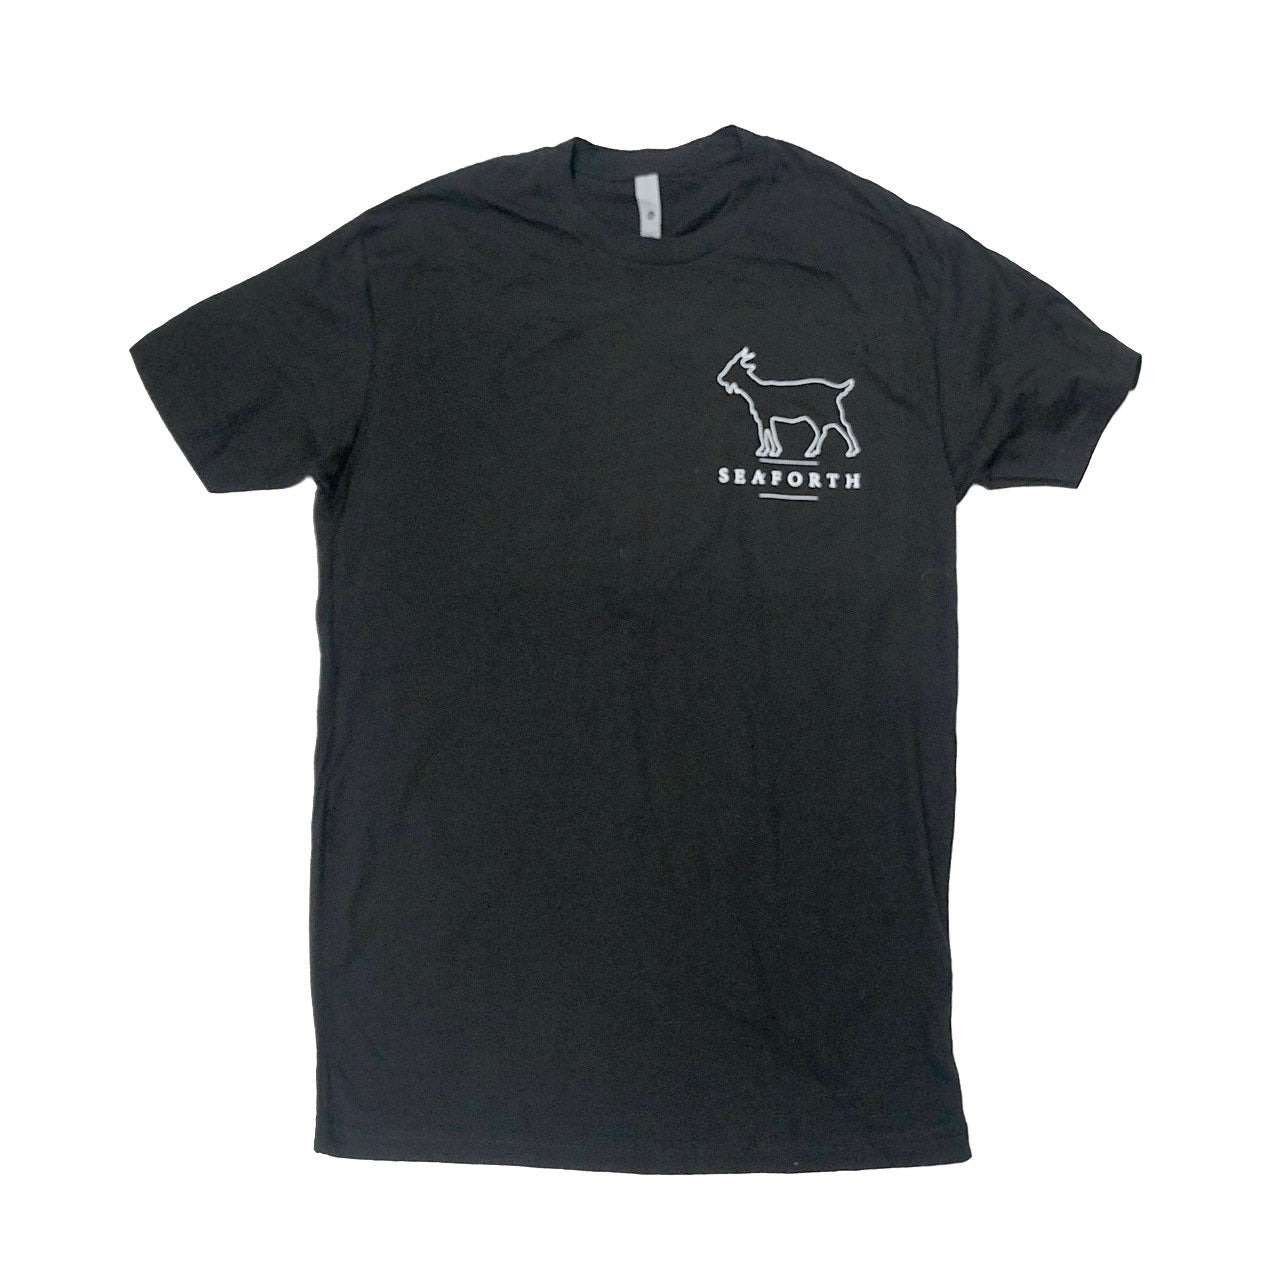 Seaforth Goat Black T-Shirt